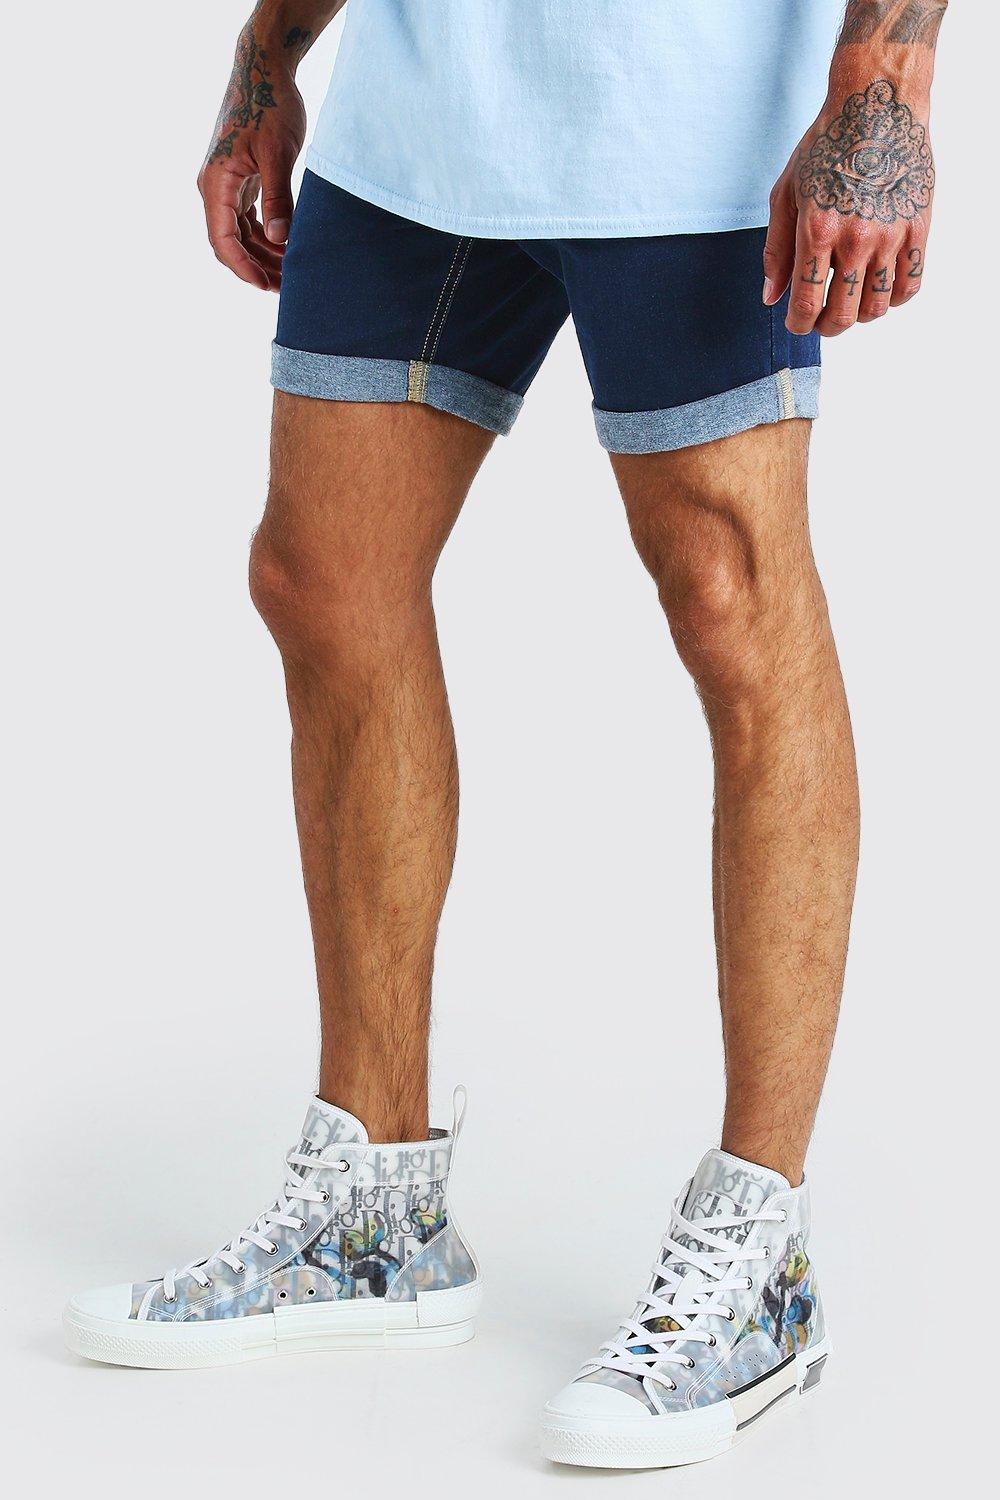 mens skinny stretch jean shorts